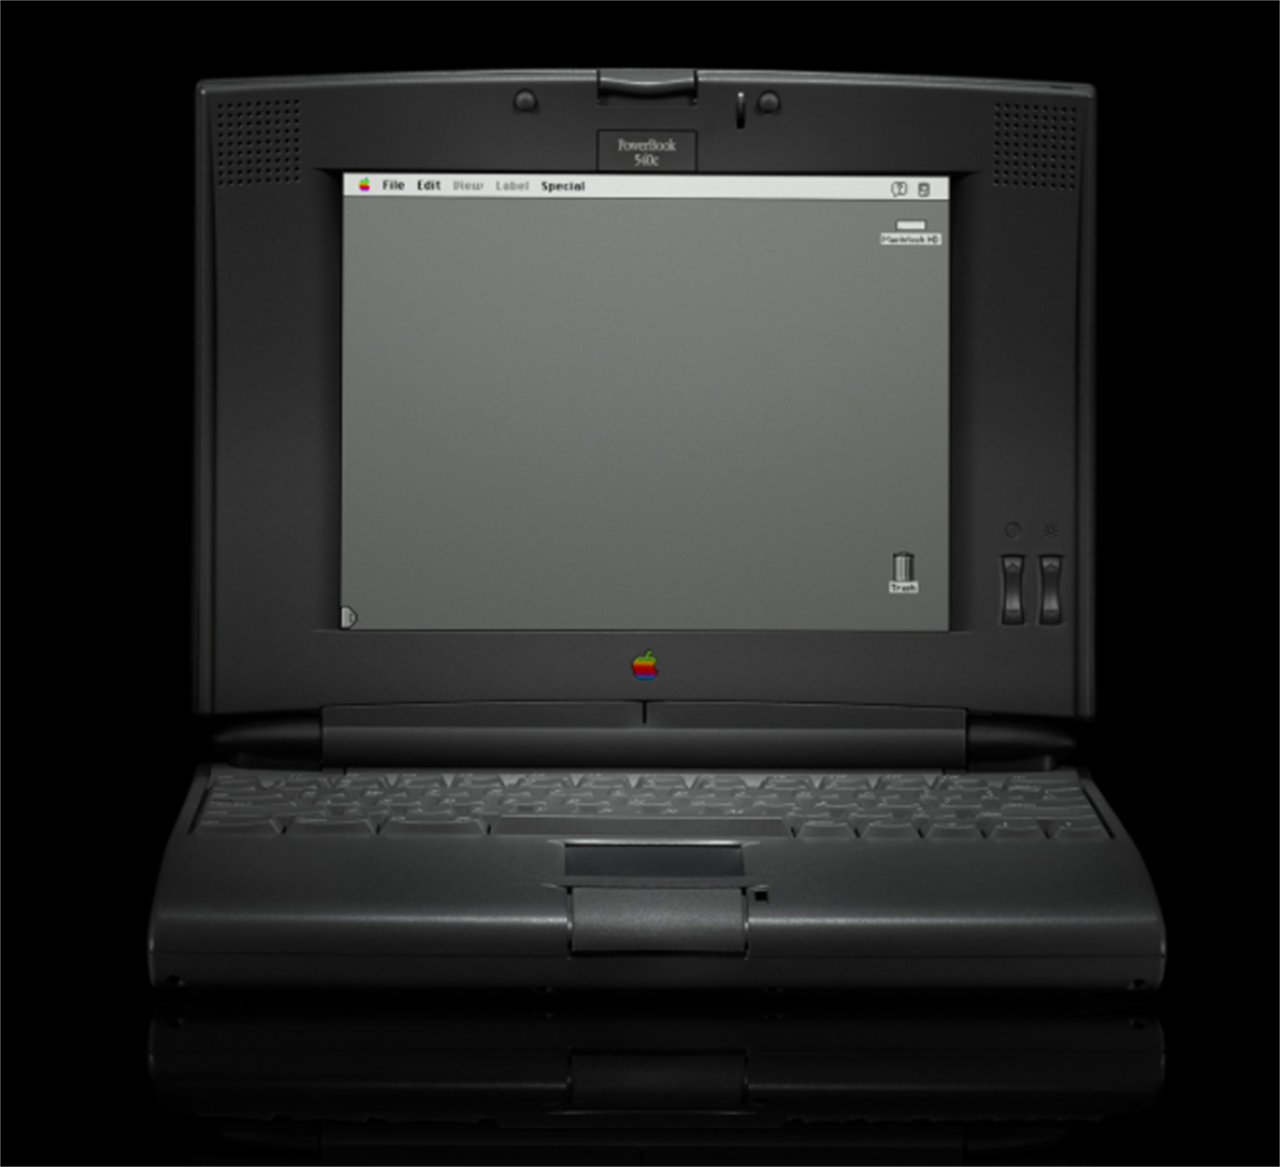 PowerBook 540 z 1994 roku